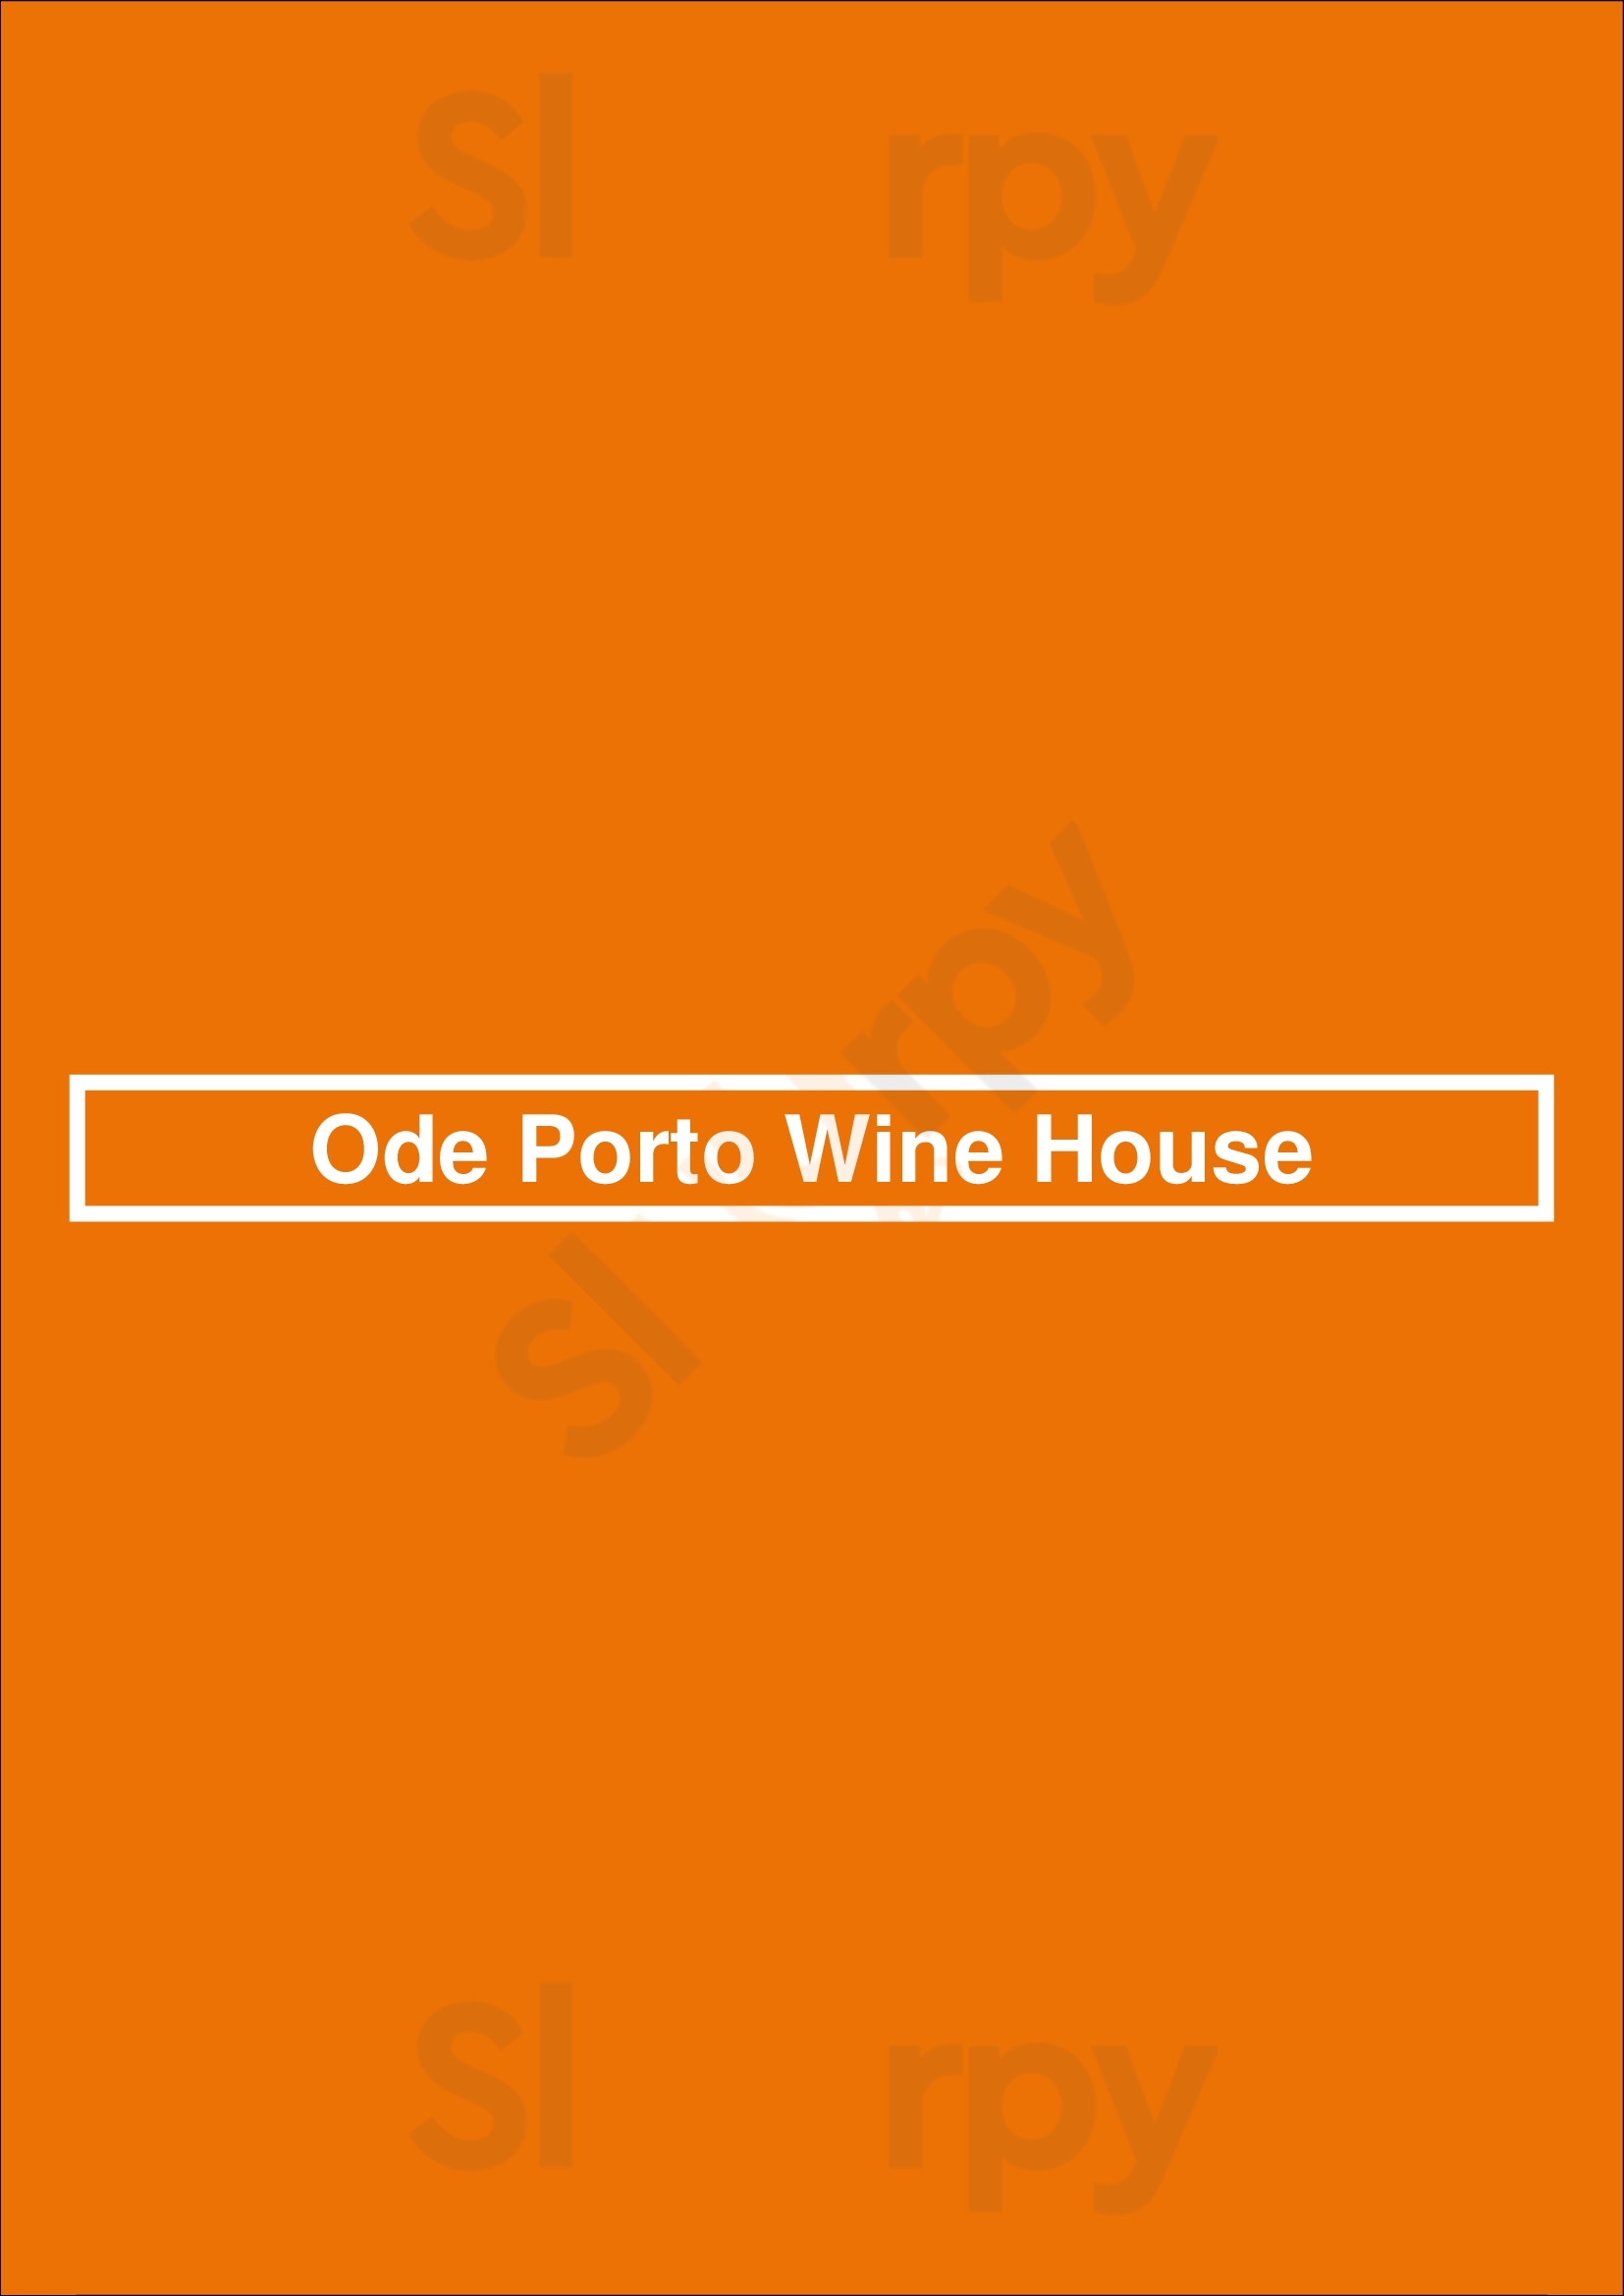 Ode Porto Wine House Porto Menu - 1